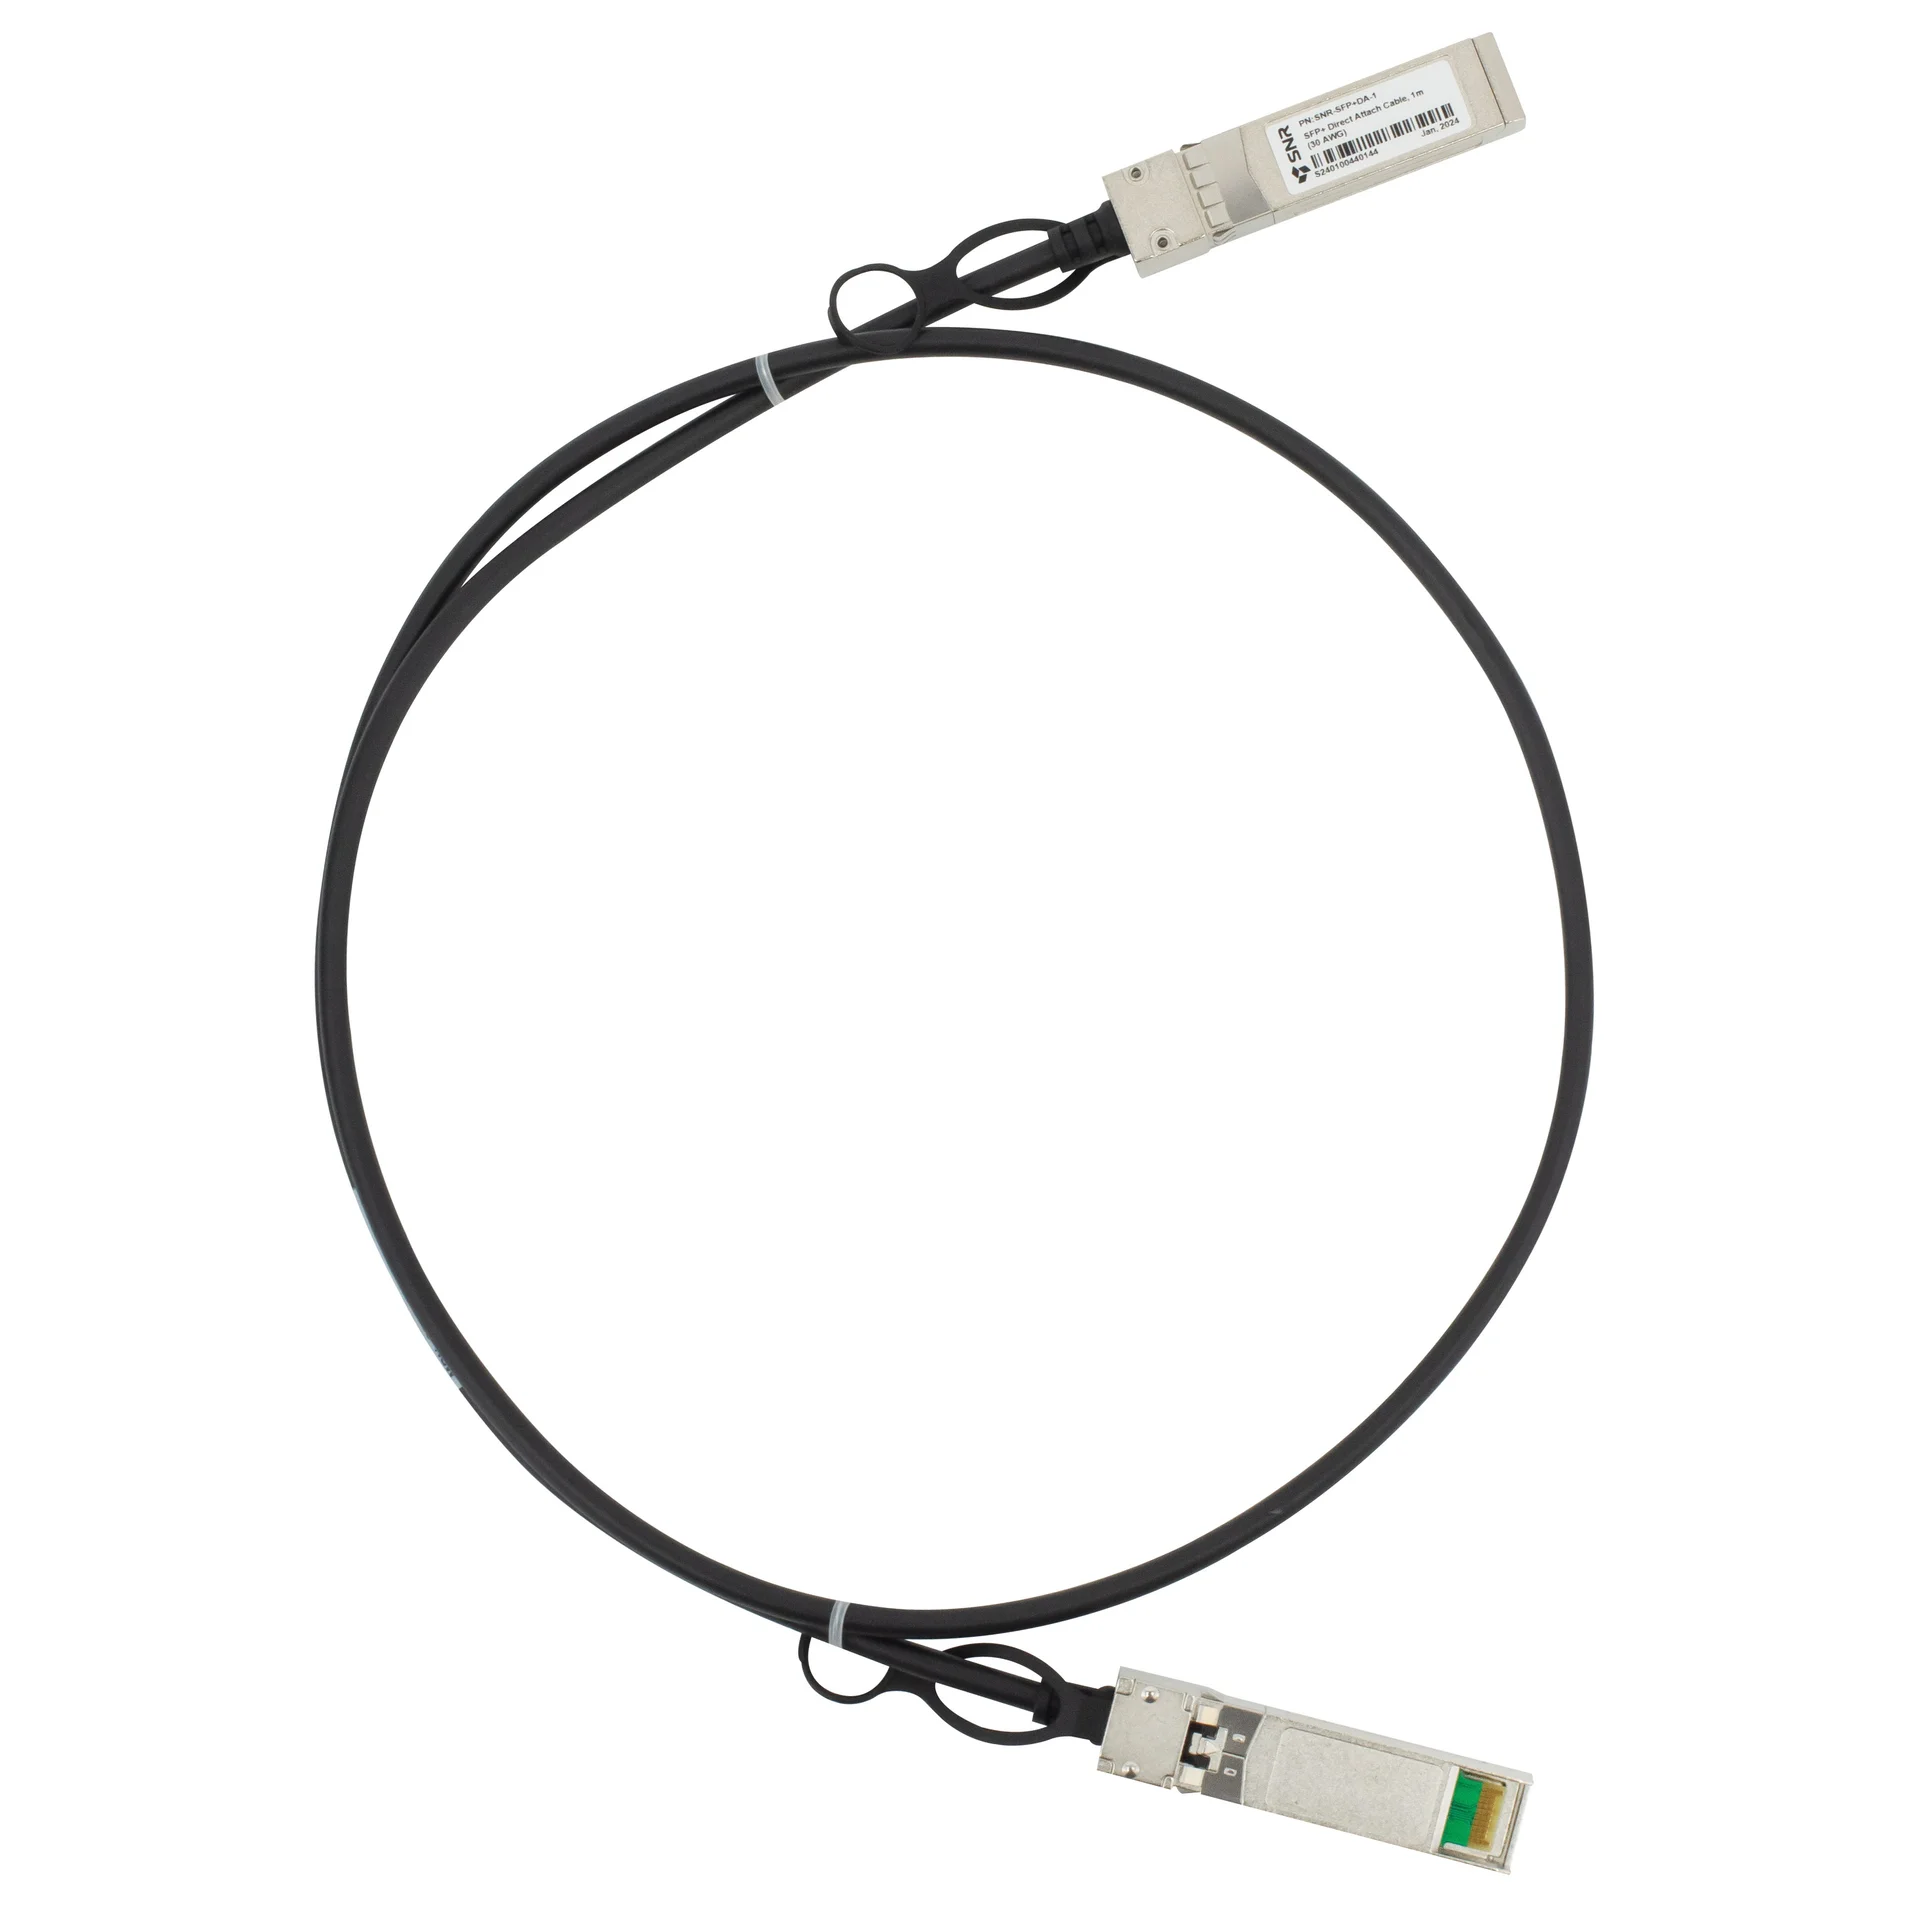 10 гигабитный Direct Attached Cable (DAC) модуль с форм-фактором SFP+, работающий по стандарту 10GBASE и совместимый со стандартами 10G Ethernet, 8/10G FibreChannel